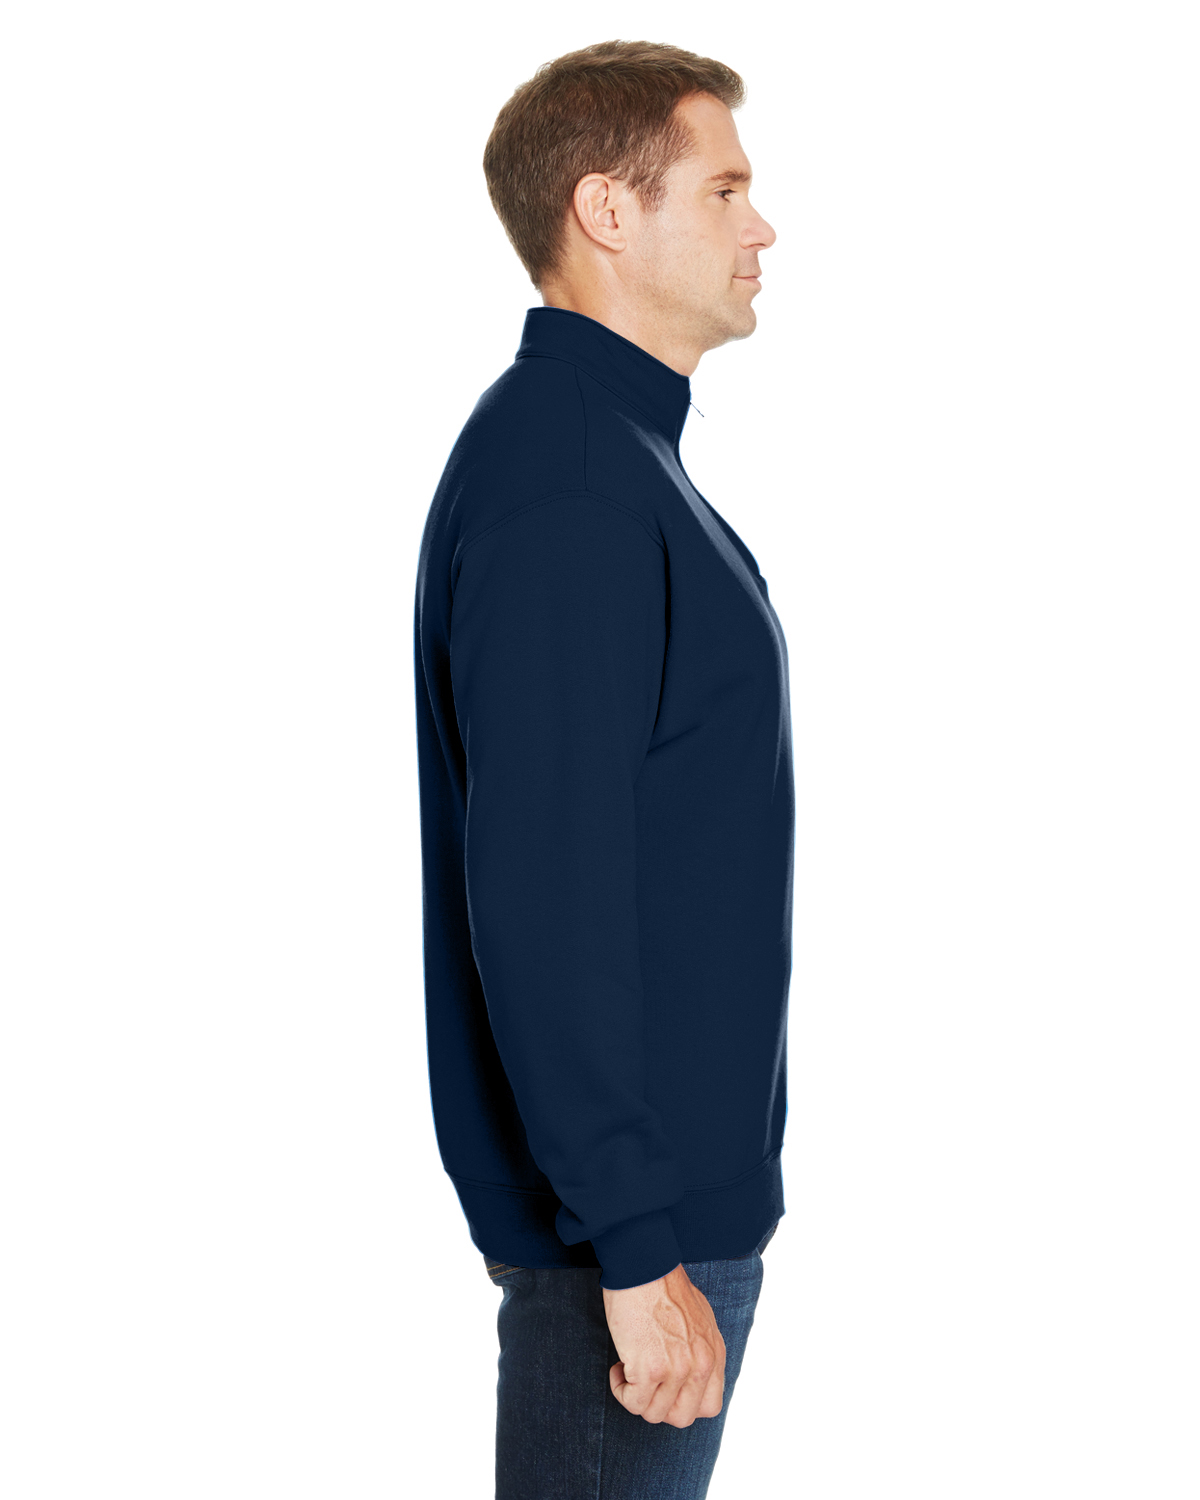 Mens 7.2 oz. Sofspun Quarter-Zip Sweatshirt (2 PACK) - image 1 of 3